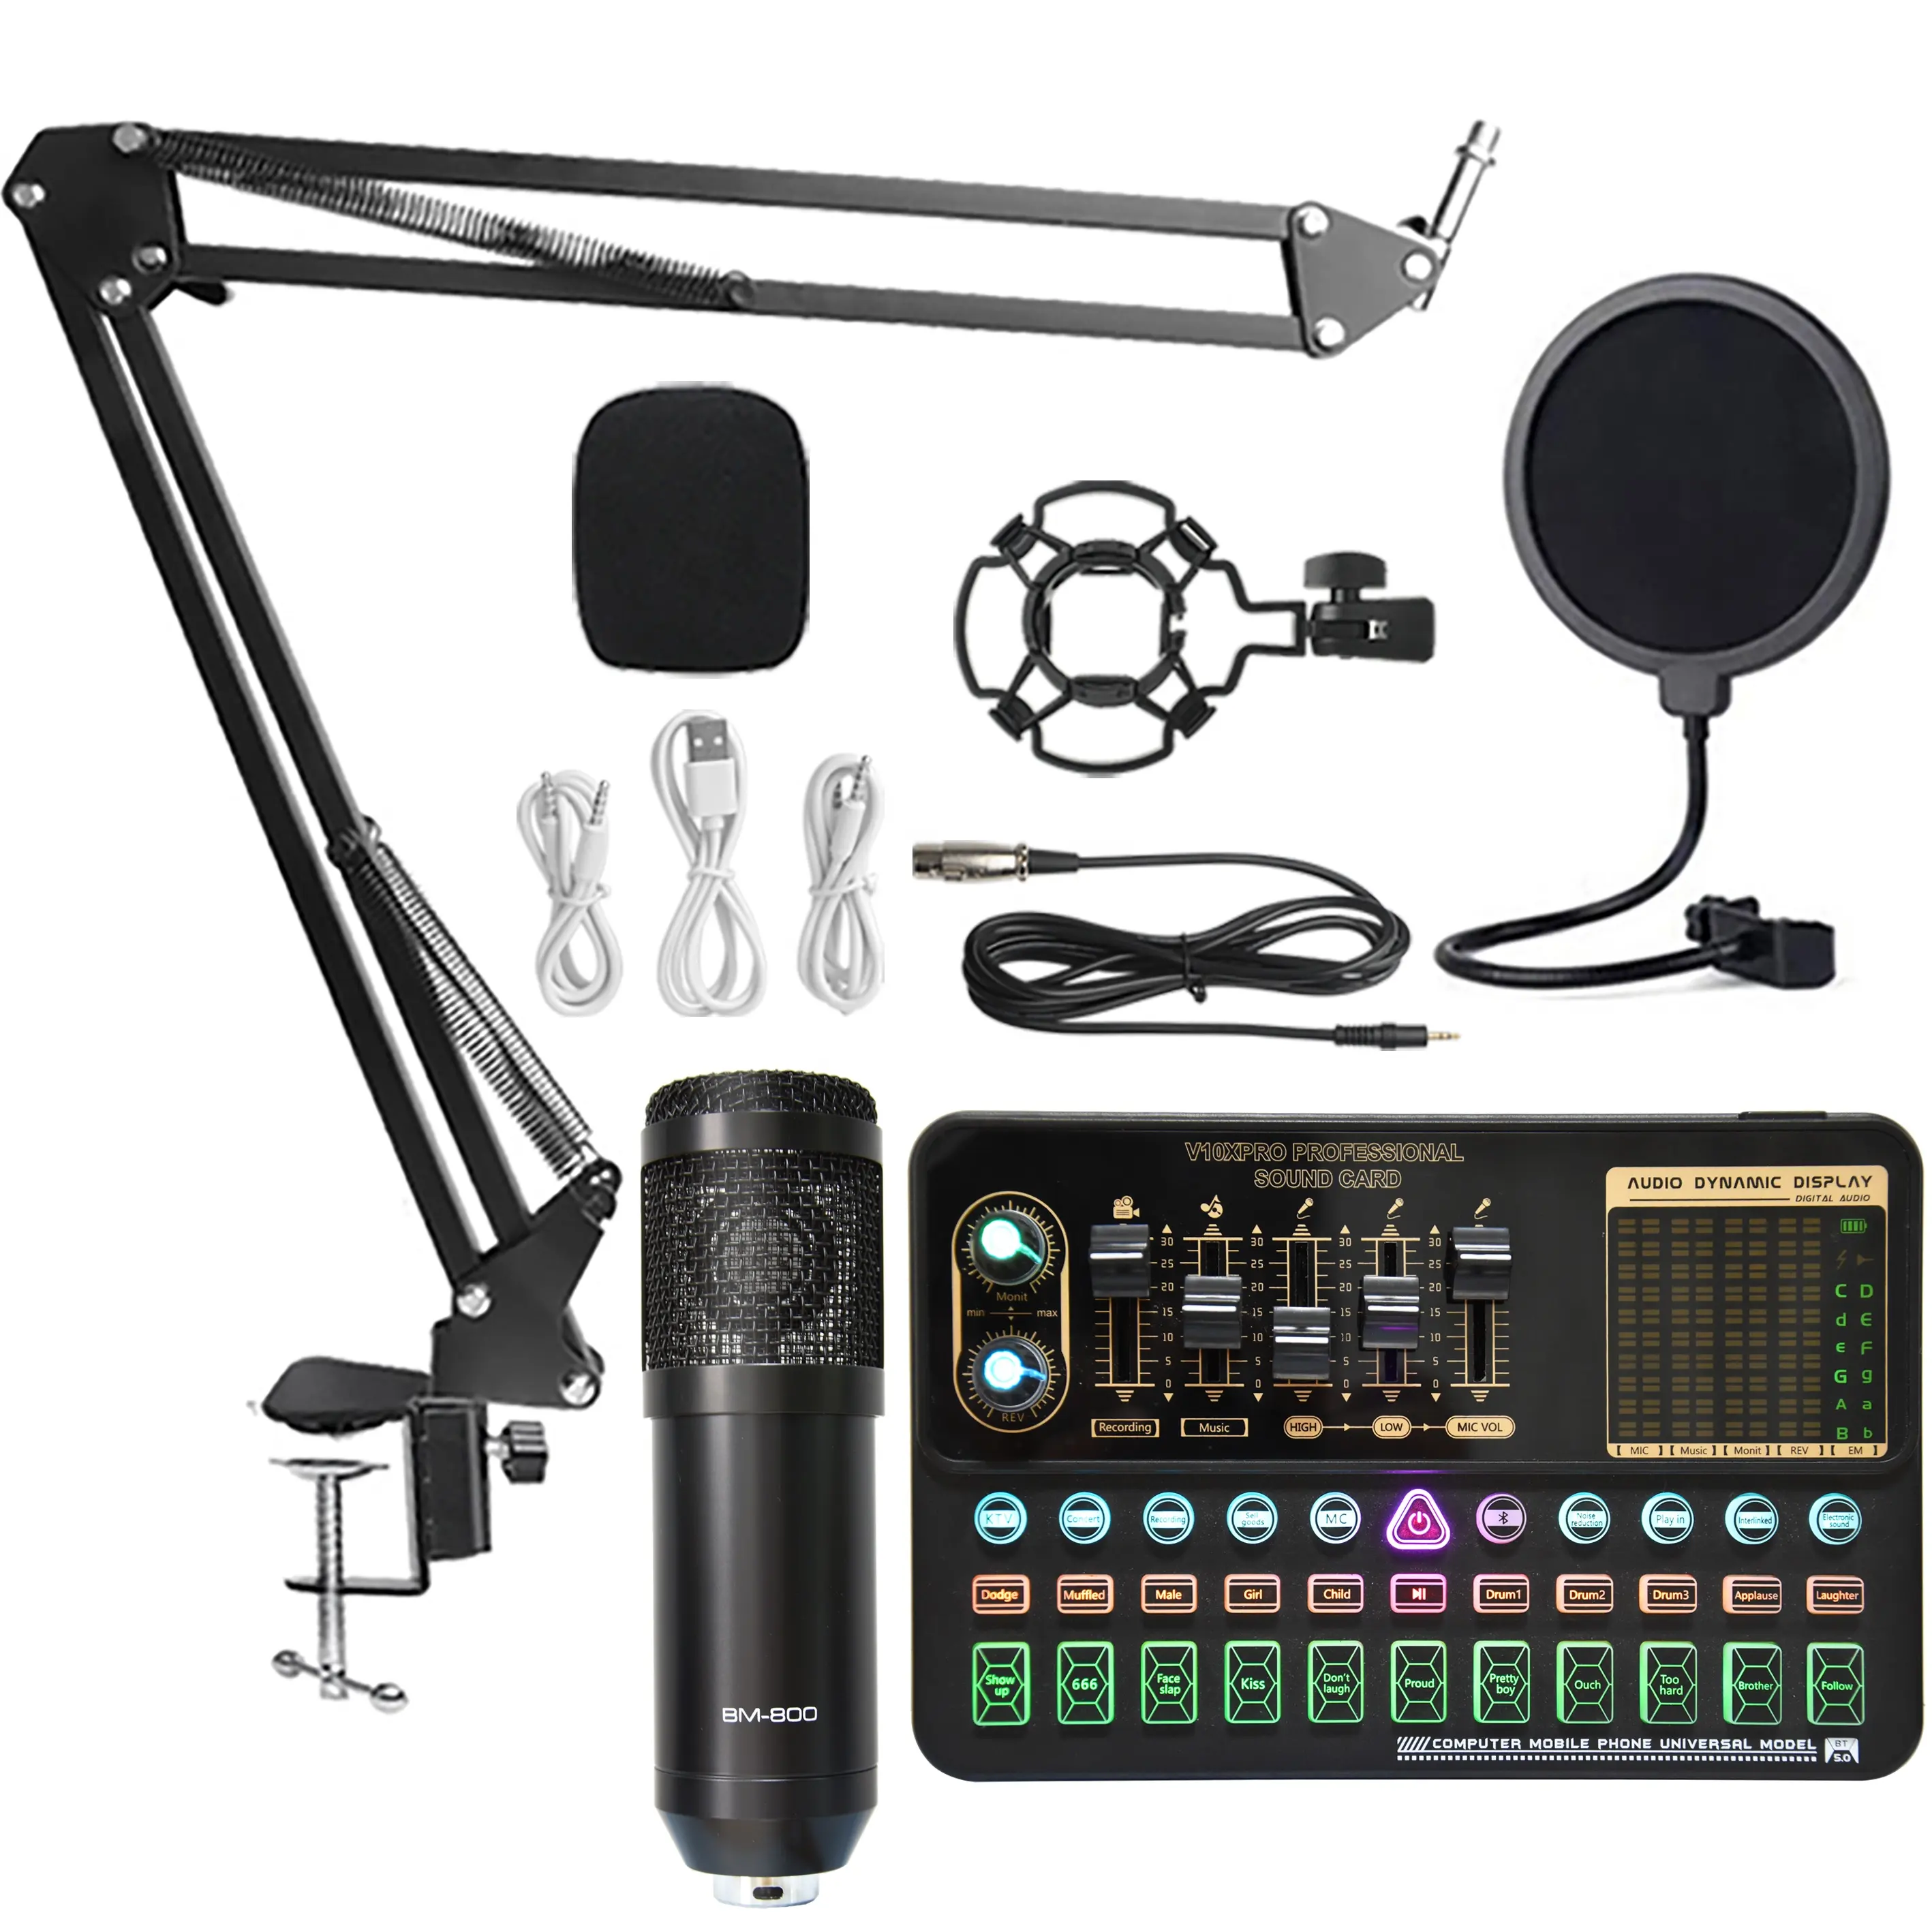 Micrófono de podcast Audio profesional V10XPRO Juego de tarjetas de sonido BM800 Mic Studio Micrófono de condensador para transmisión en vivo